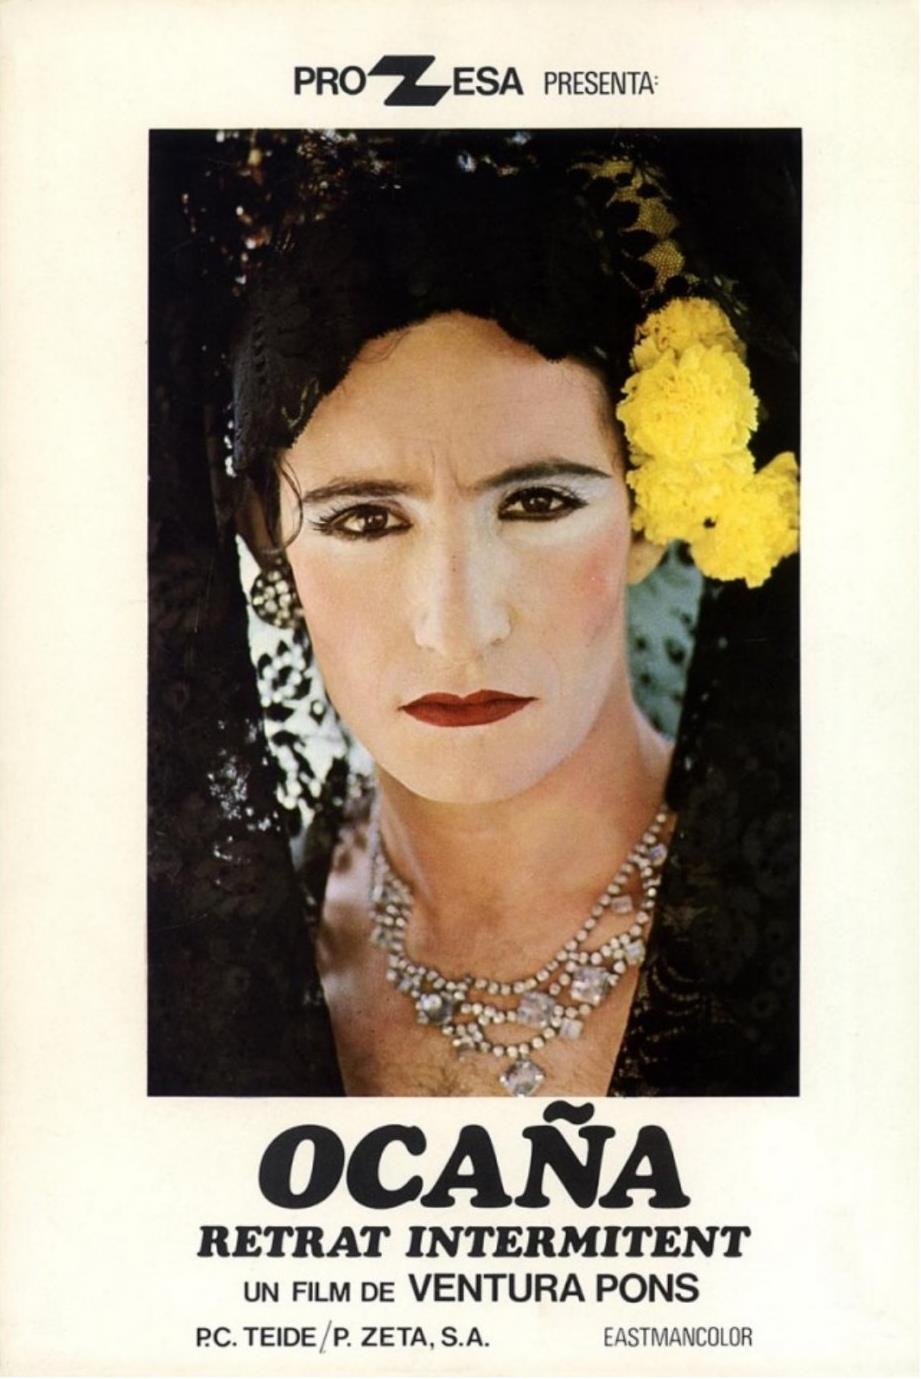 Ocaña, an intermittent portrait, Ventura Pons (1978